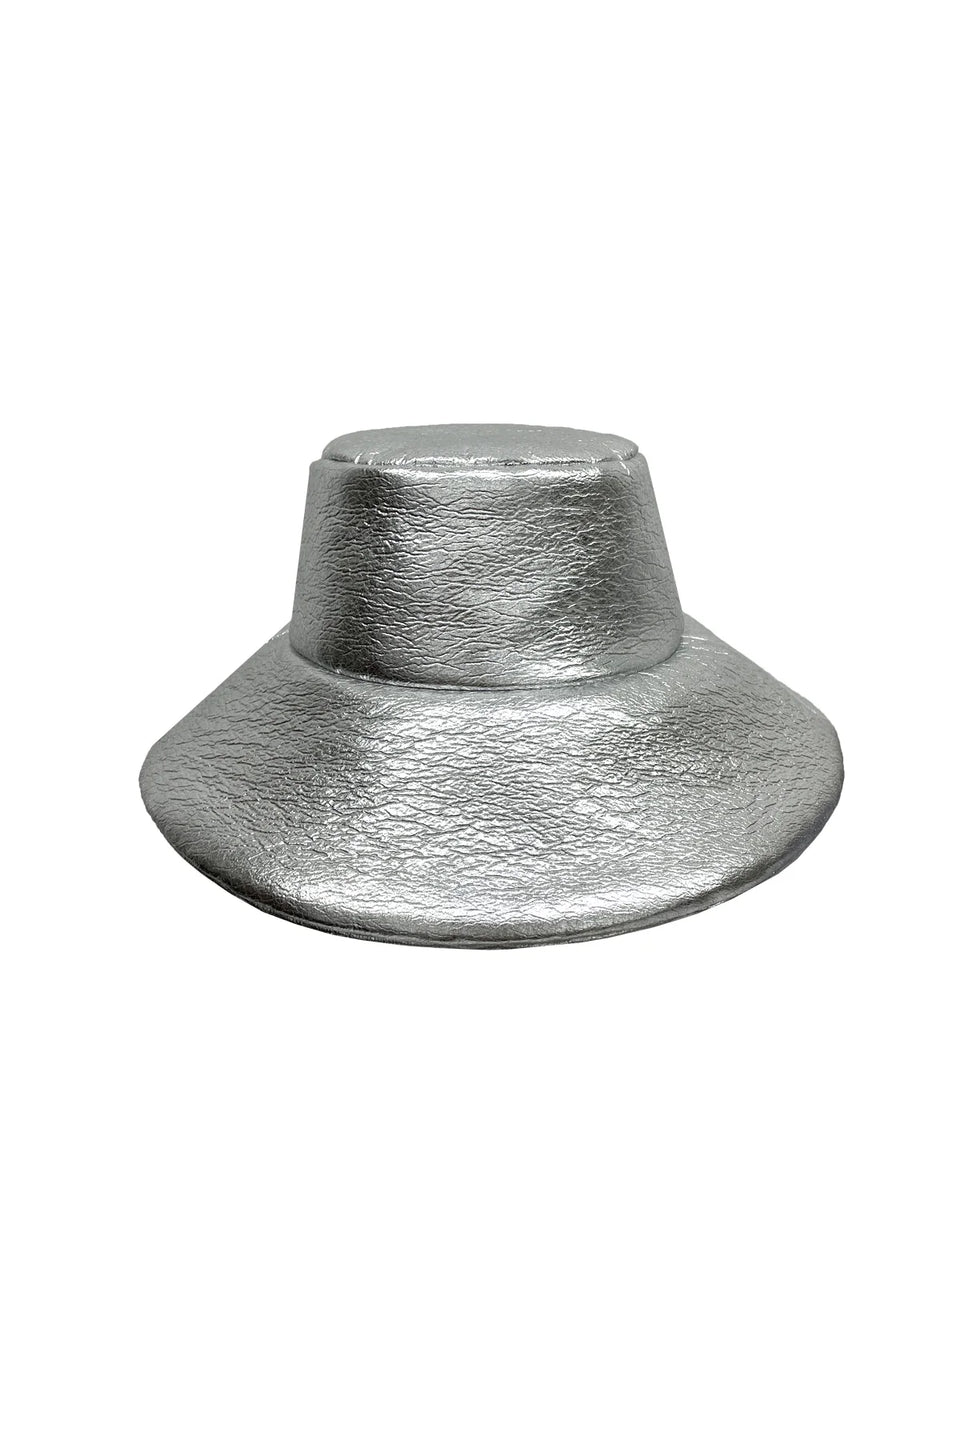 WAYT - Silver Moon Kova Şapka